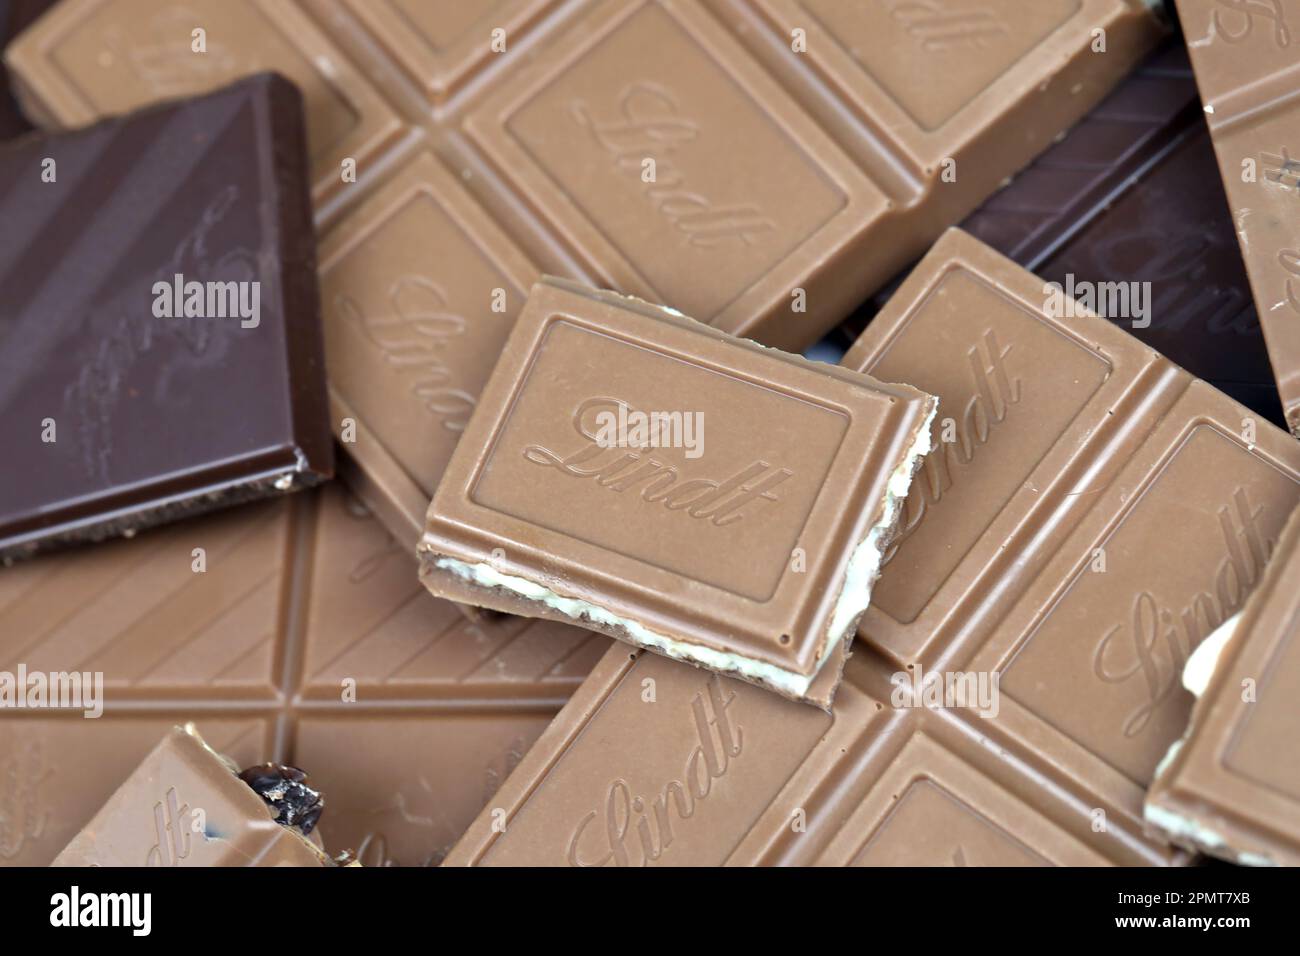 https://c8.alamy.com/comp/2PMT7XB/kyiv-ukraine-may-4-2022-lindt-swiss-luxury-brand-chocolate-brown-tablets-with-embossed-original-company-logo-2PMT7XB.jpg